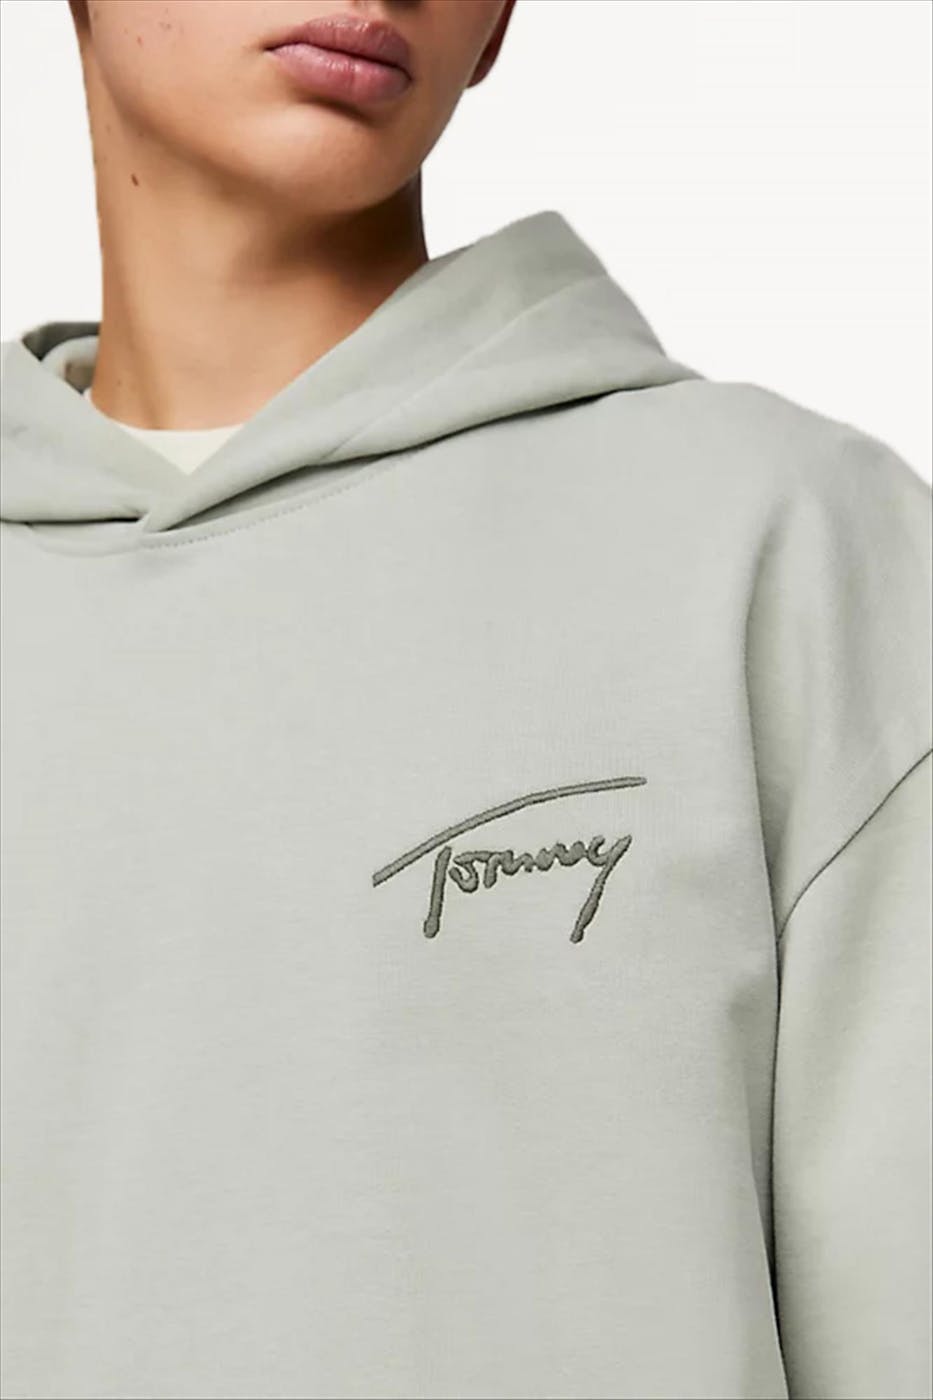 Tommy Jeans - Mintgroene Signature hoodie